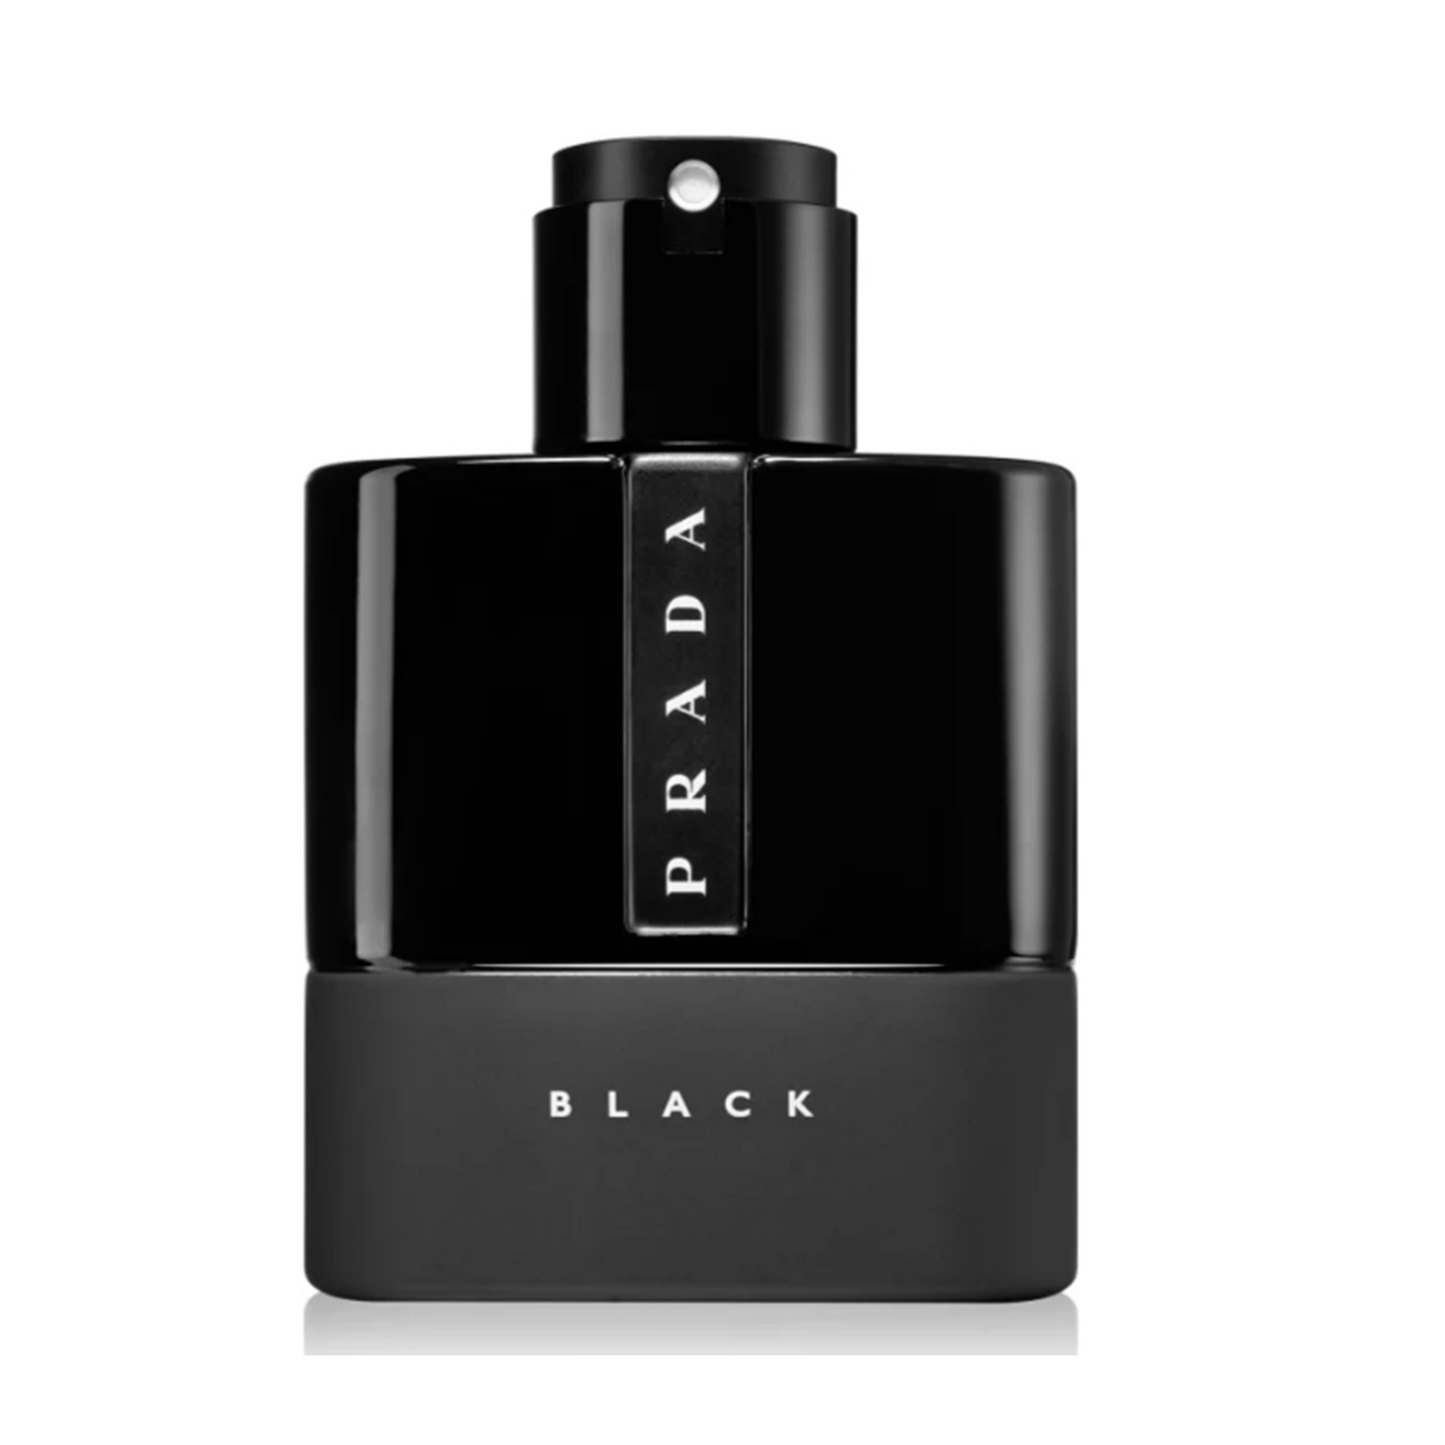 PRADA - Black - Duftprobe Parfümprobe Abfüllung